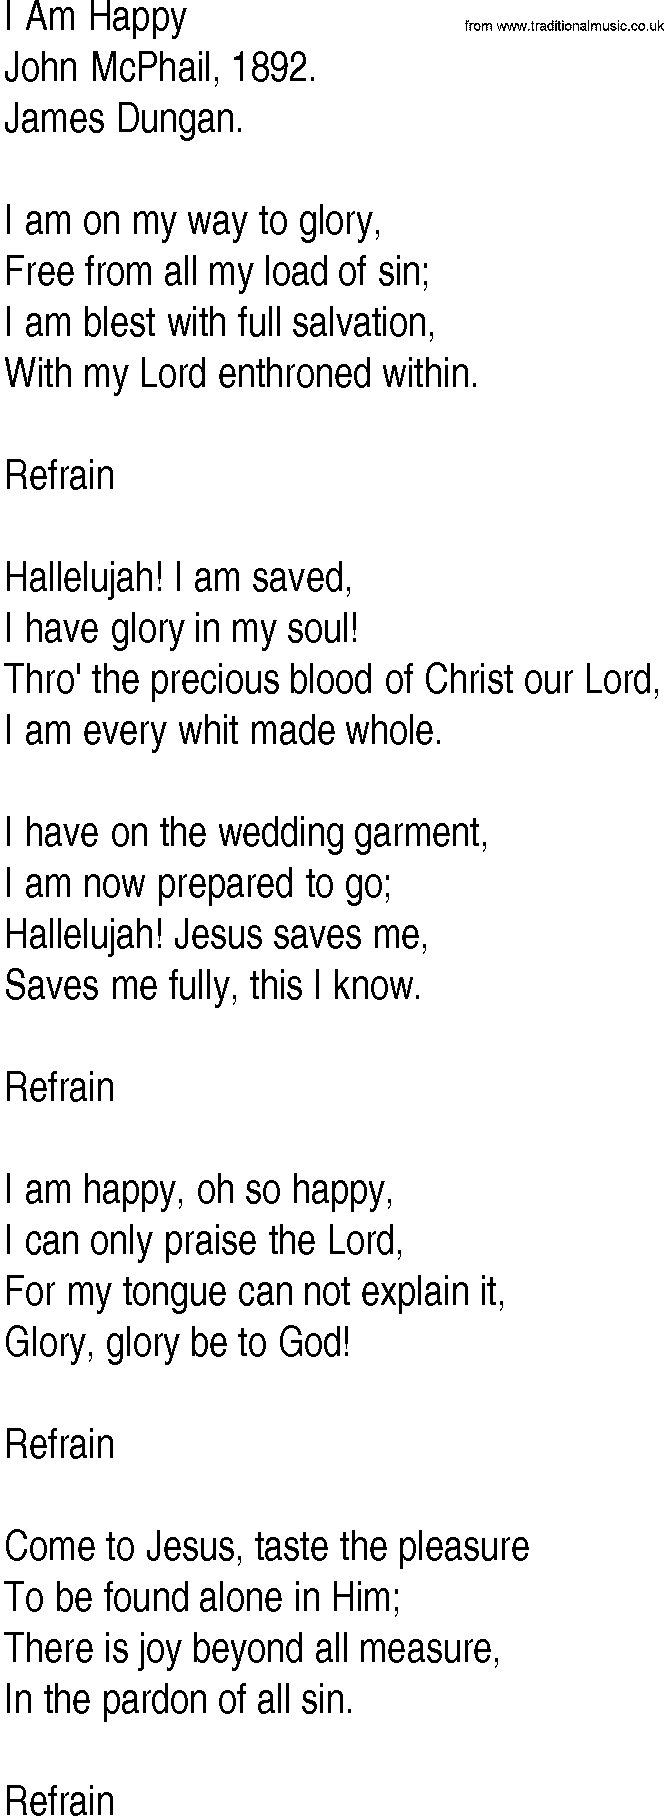 Hymn and Gospel Song: I Am Happy by John McPhail lyrics